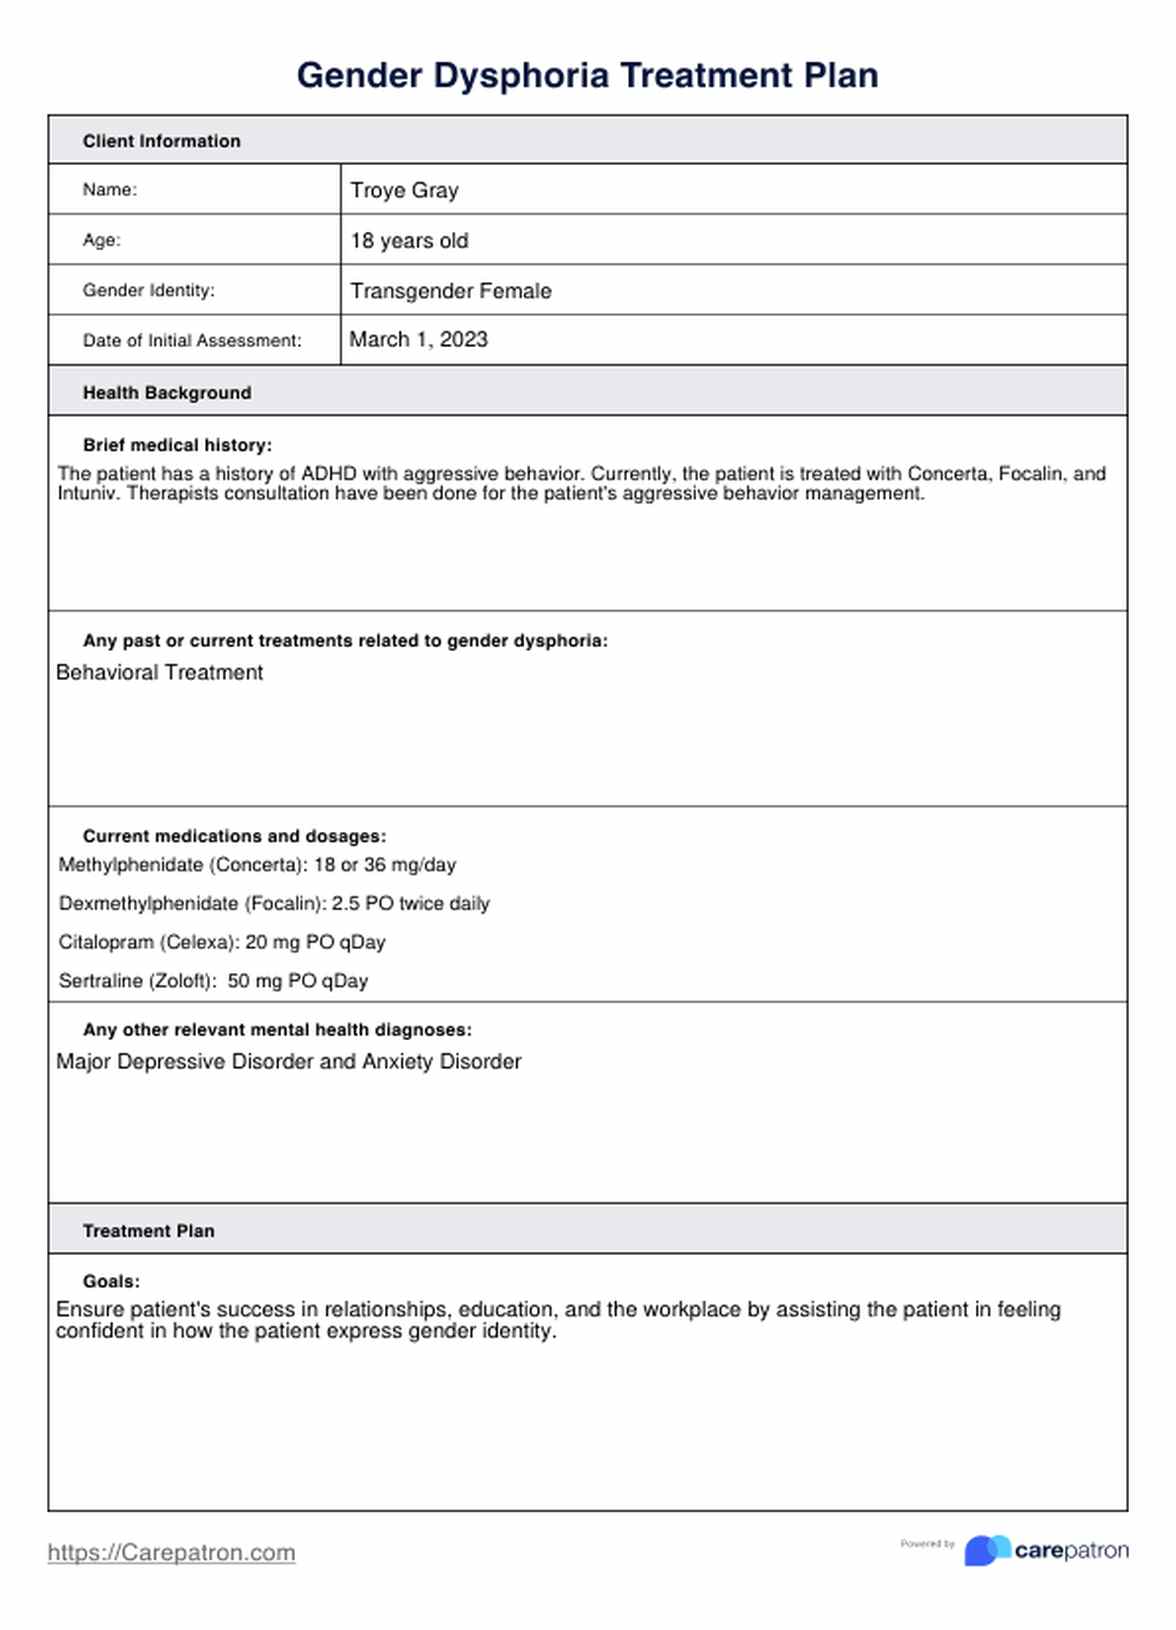 Gender Dysphoria Treatment Plans PDF Example